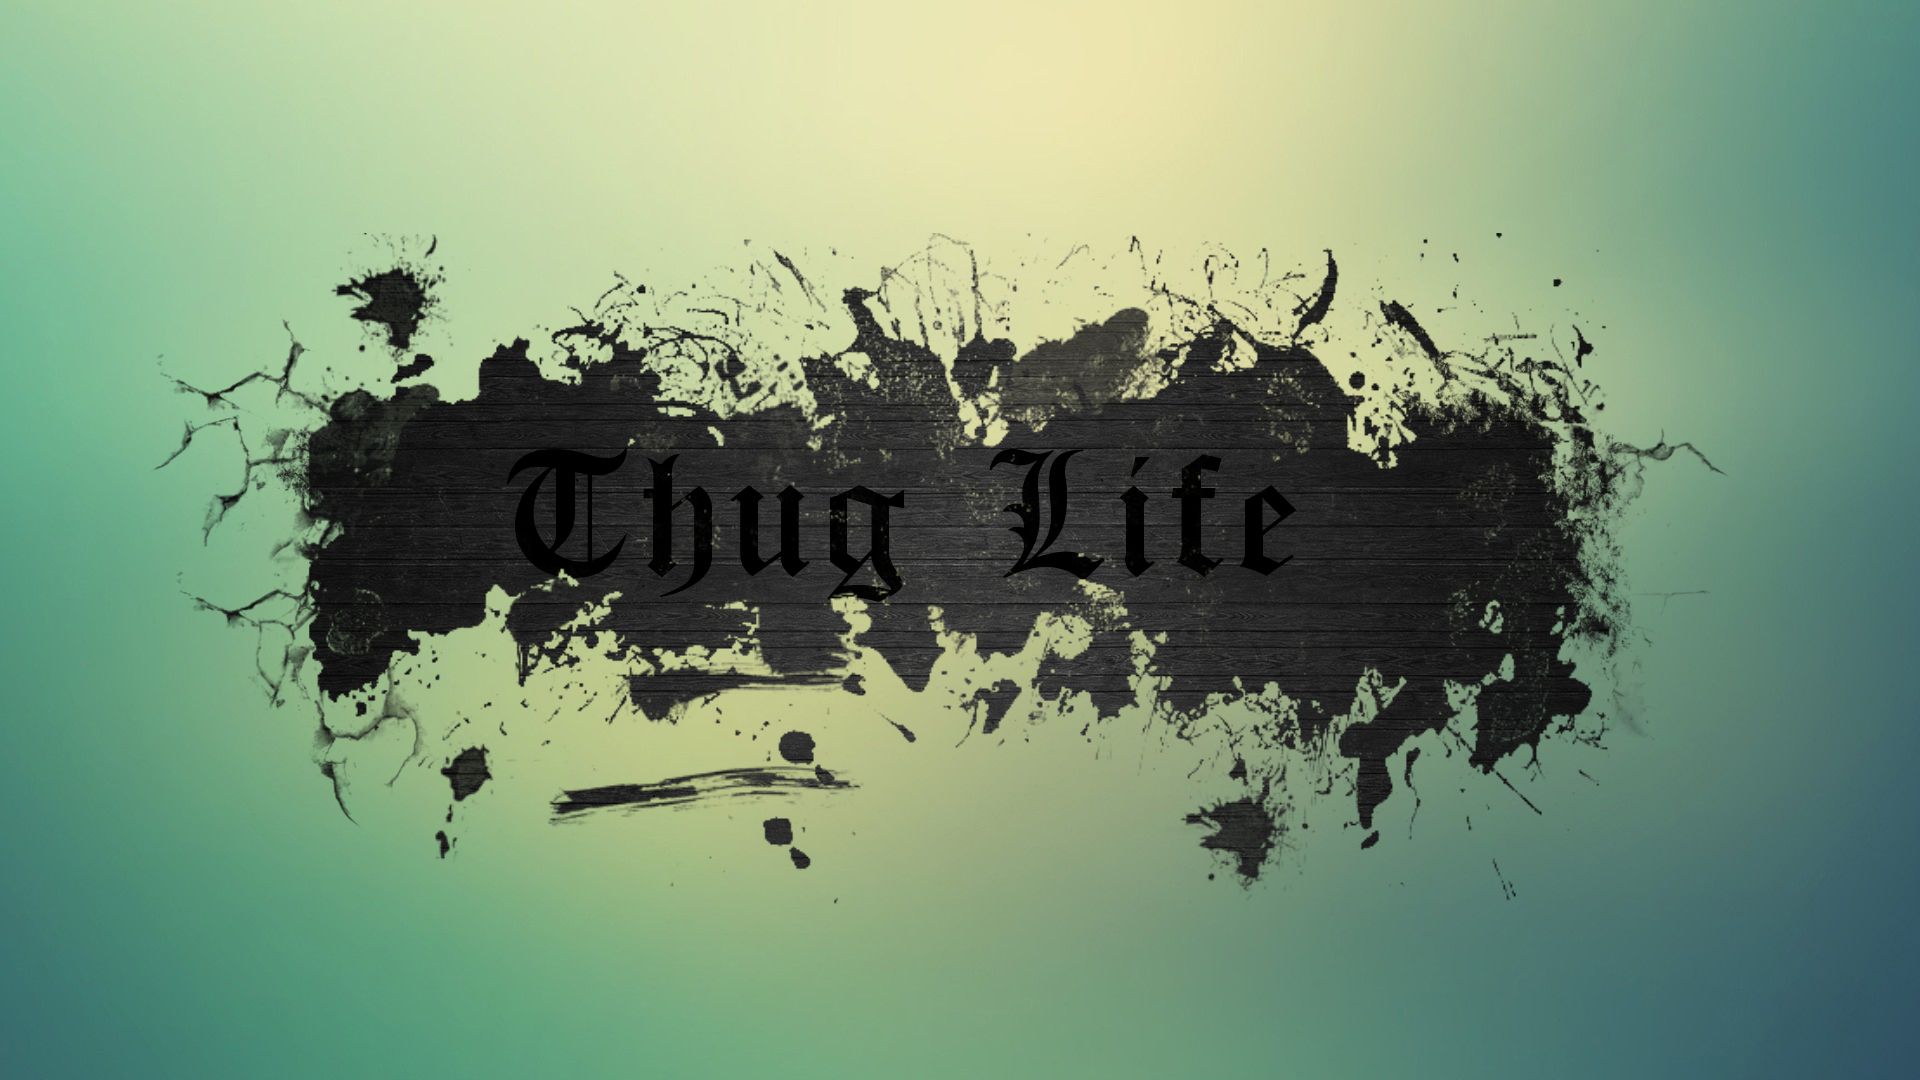 Thug Life by curtisblade on DeviantArt